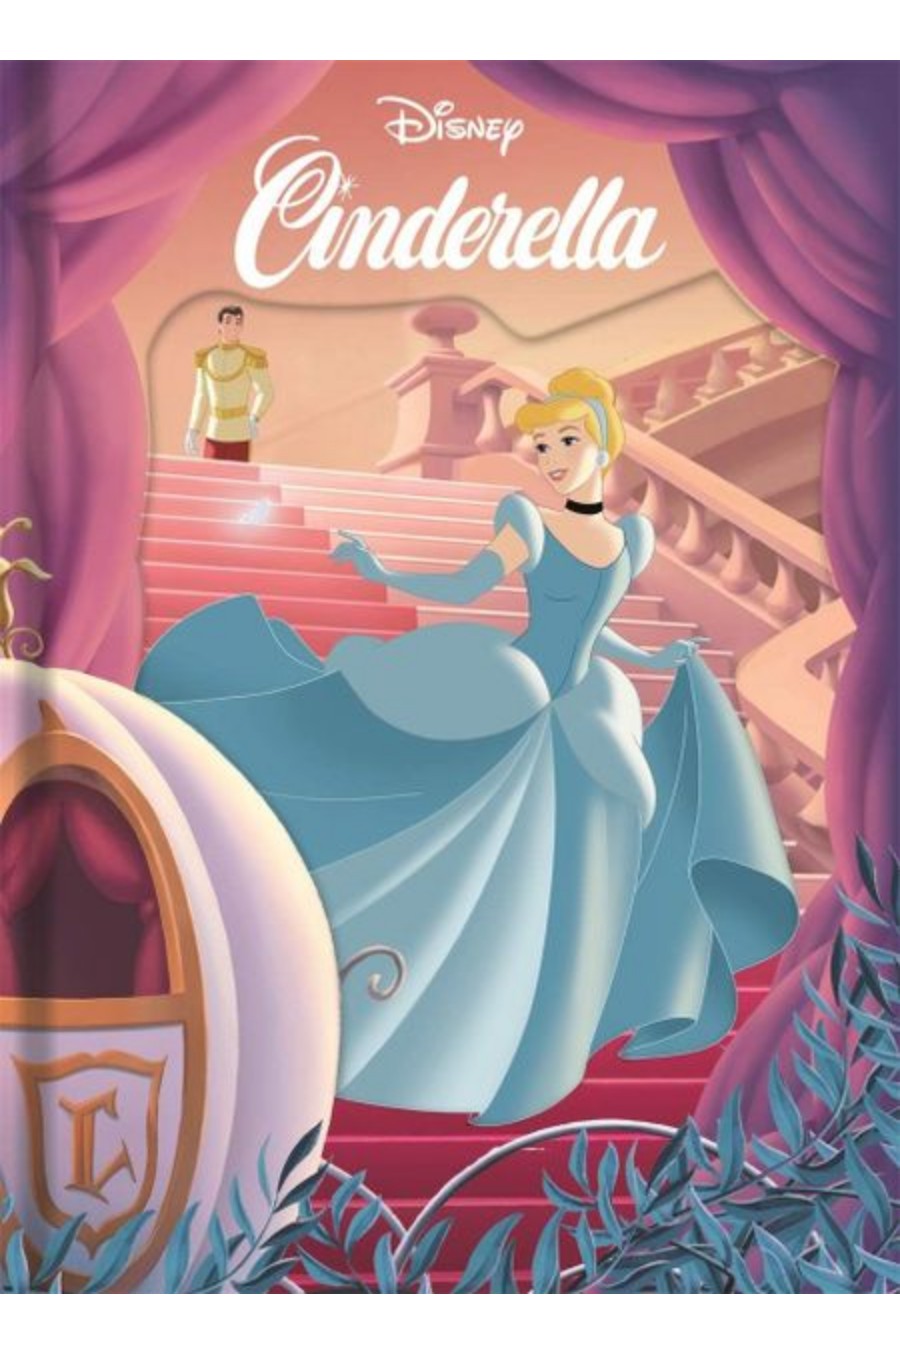 Book Creator - The Disney Cinderella